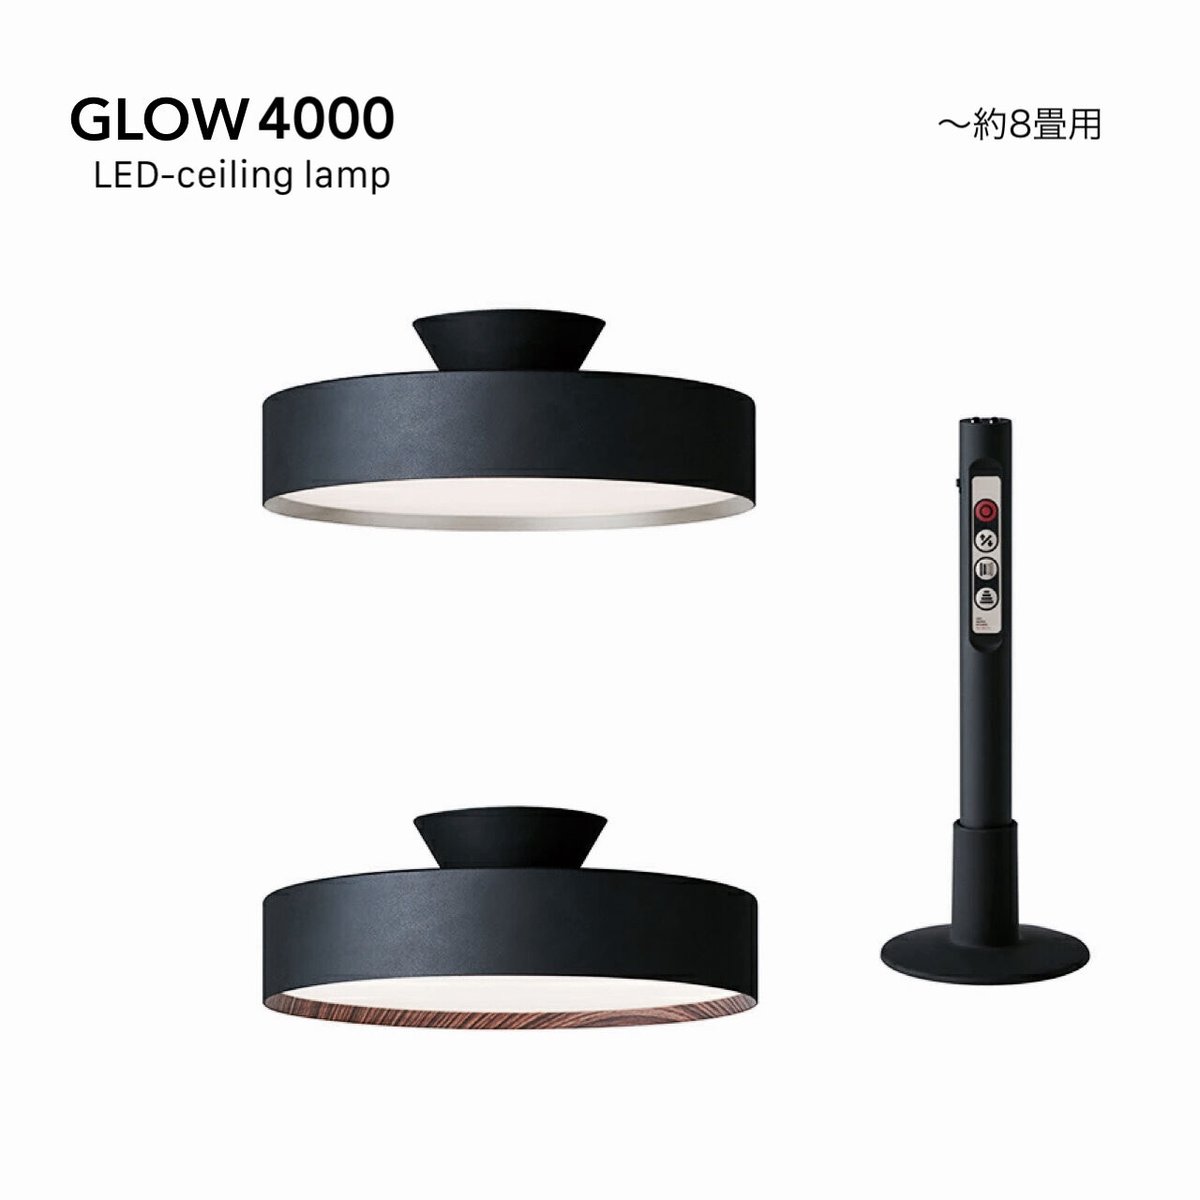 GLOW 4000 LED-ceiling lamp / ARTWORK STUDIO / 天井照明 / シーリングランプ / 高寿命 LED内蔵  調光 調色 おしゃれ リモコン付 ⚫︎8畳用